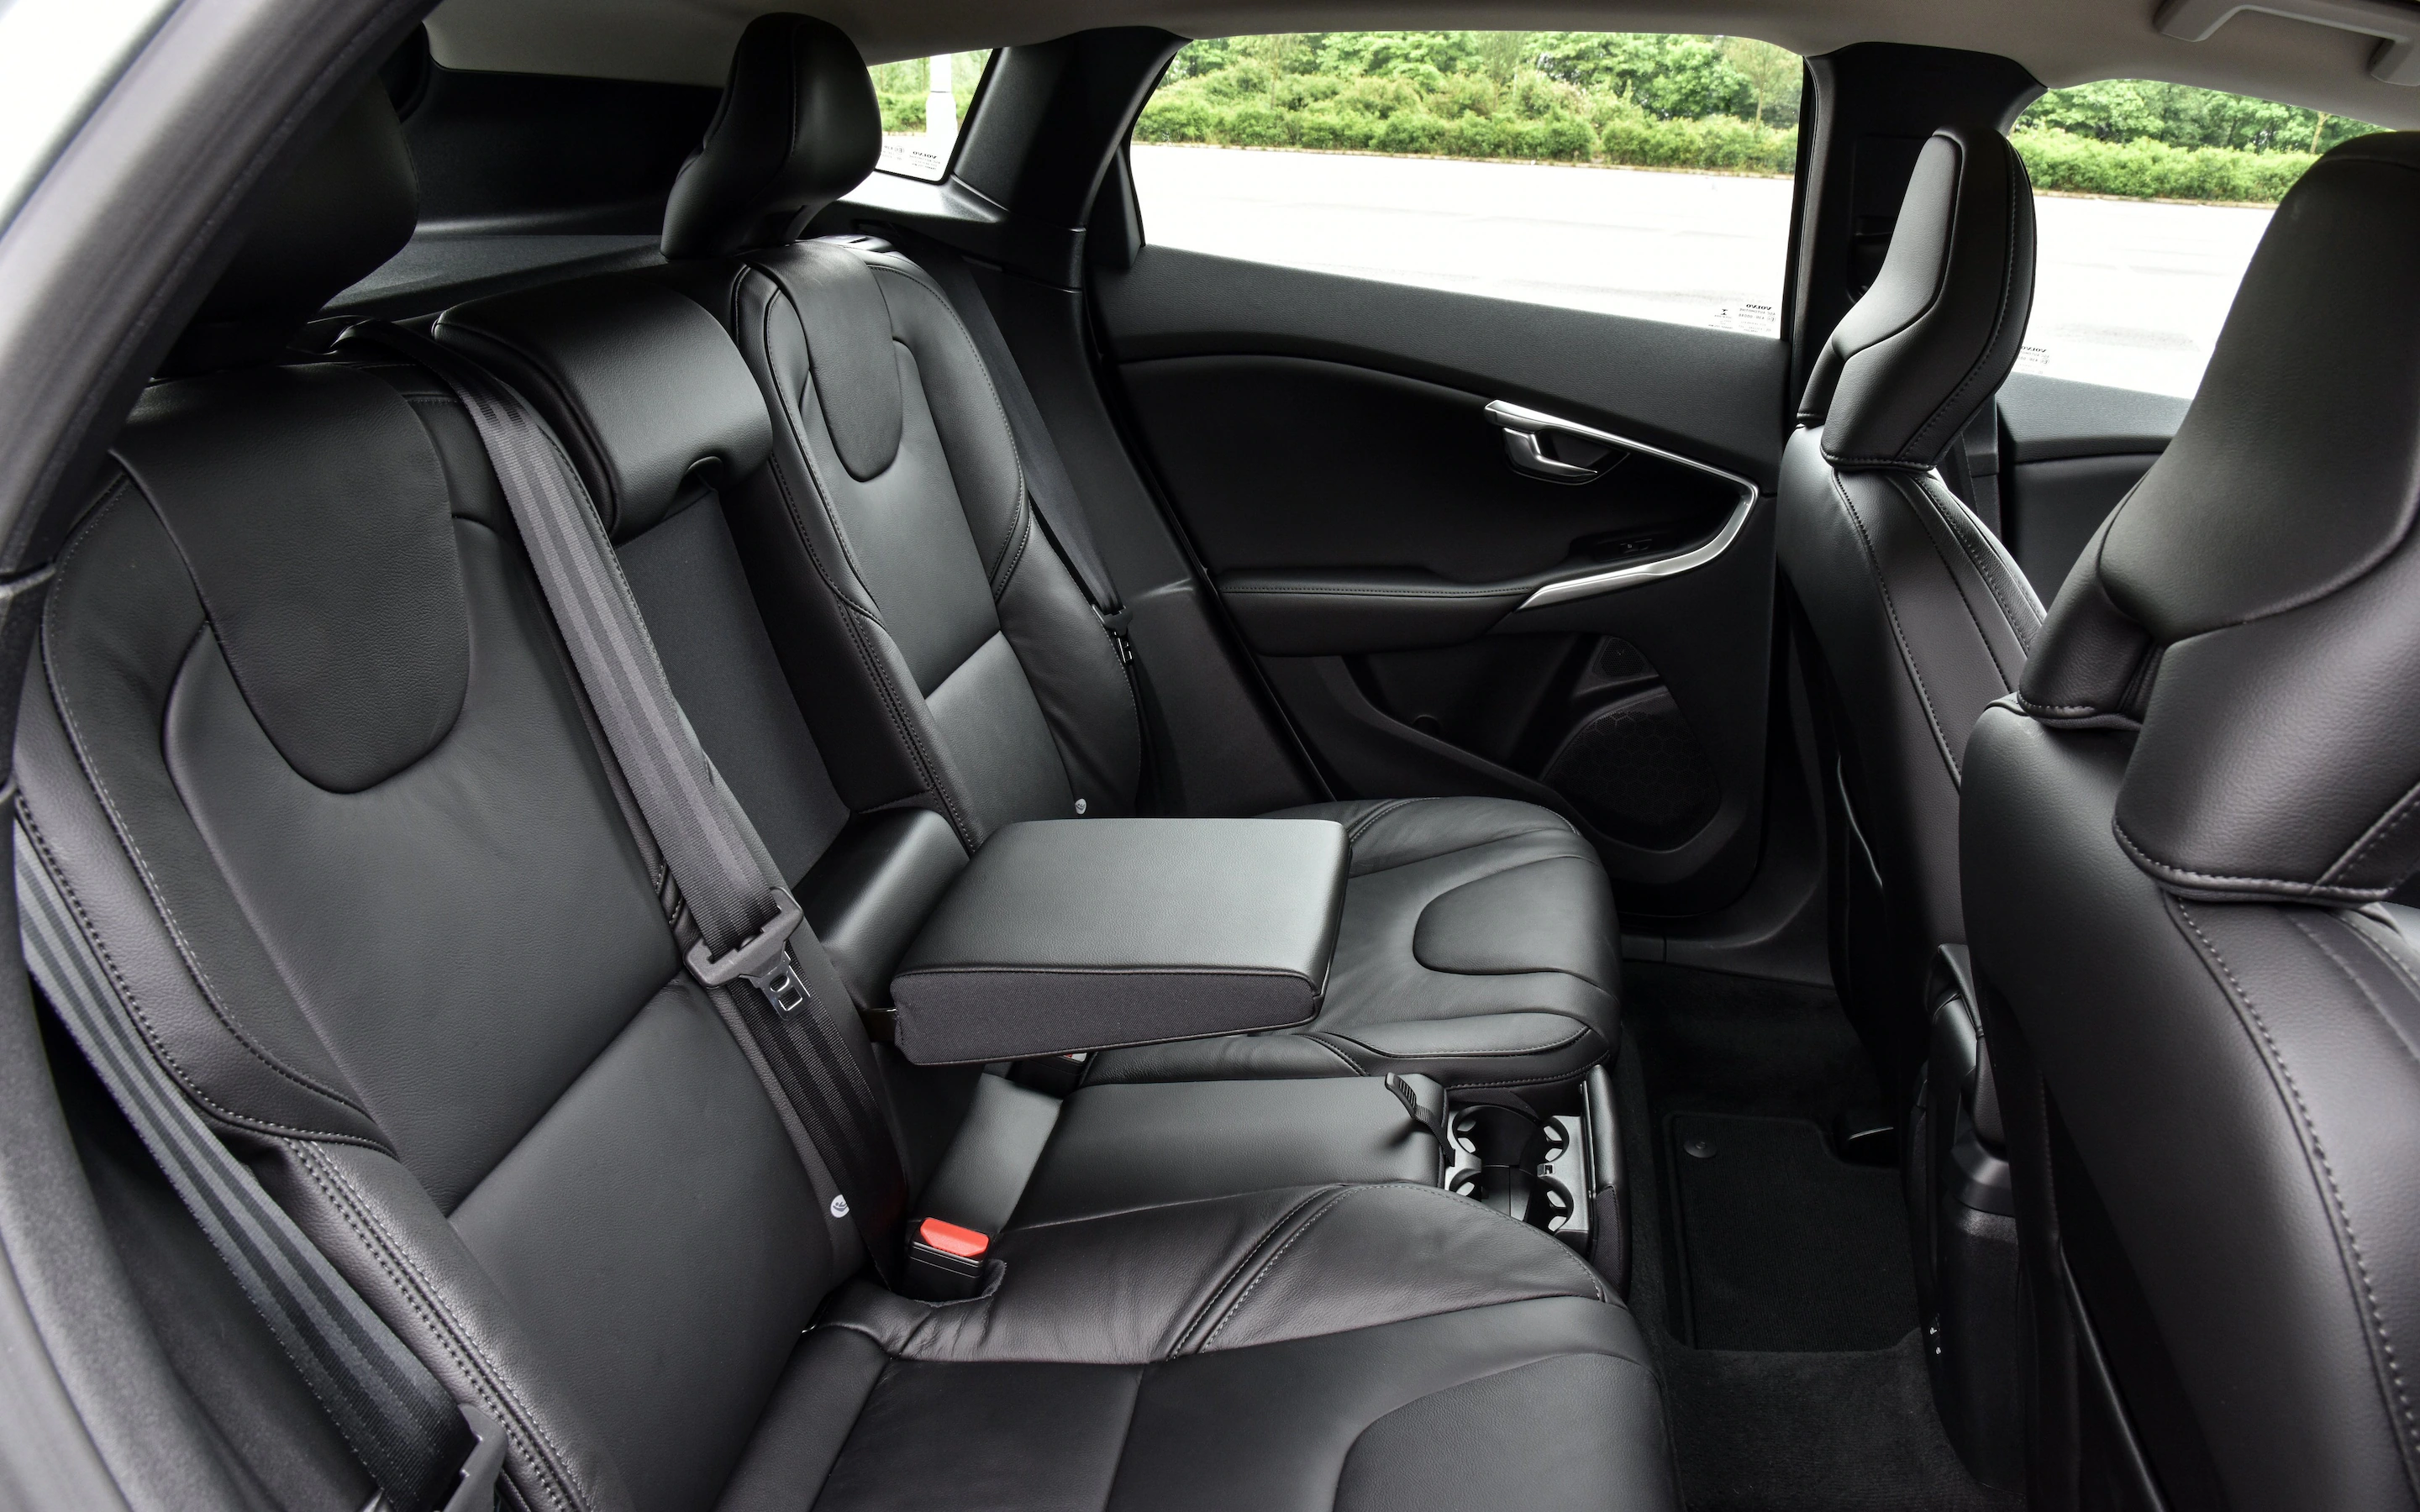 Volvo V40 interior - Seats